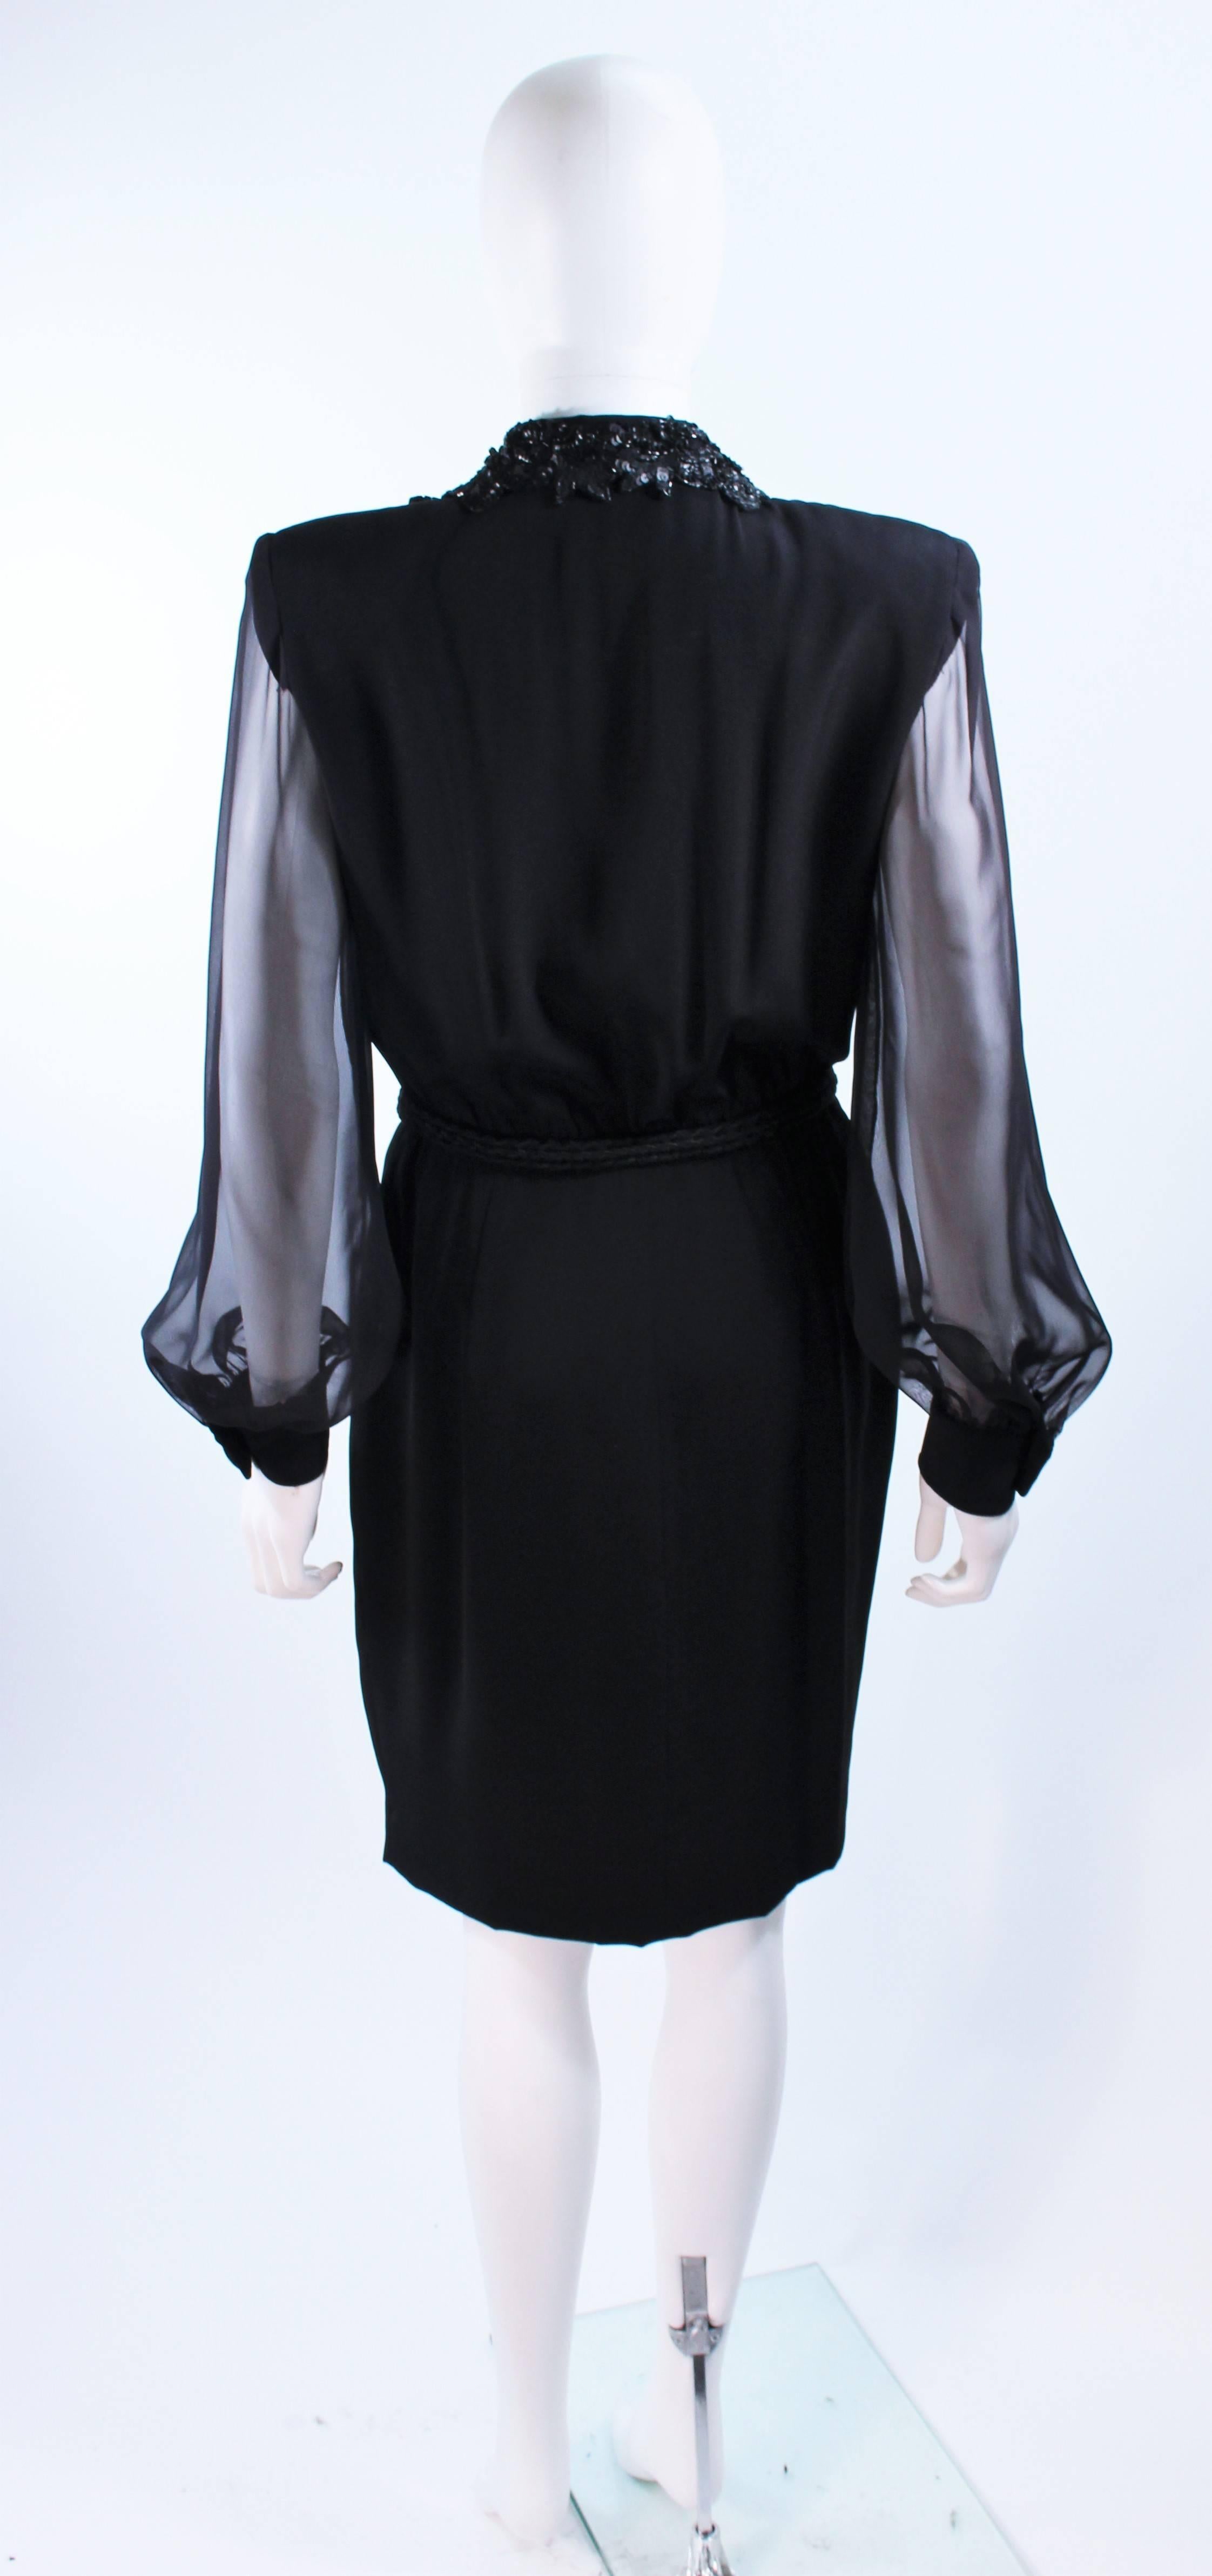 LIAN CARLO Black Sequin Chiffon Sheer Sleeve Cocktail Dress Size 8 For Sale 4